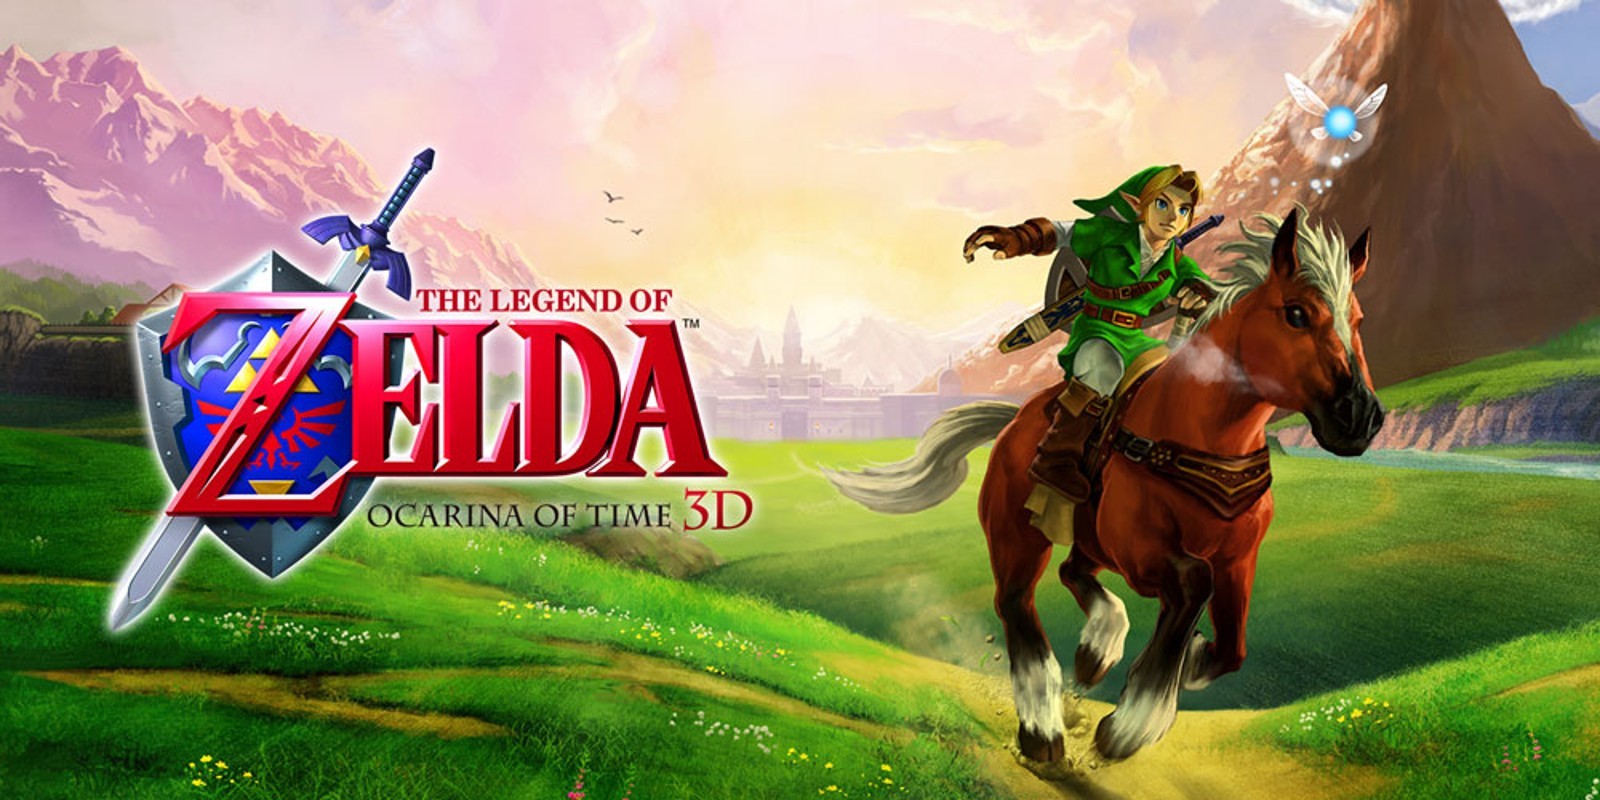 The Legend of Zelda: Ocarina of Time. Nintendo